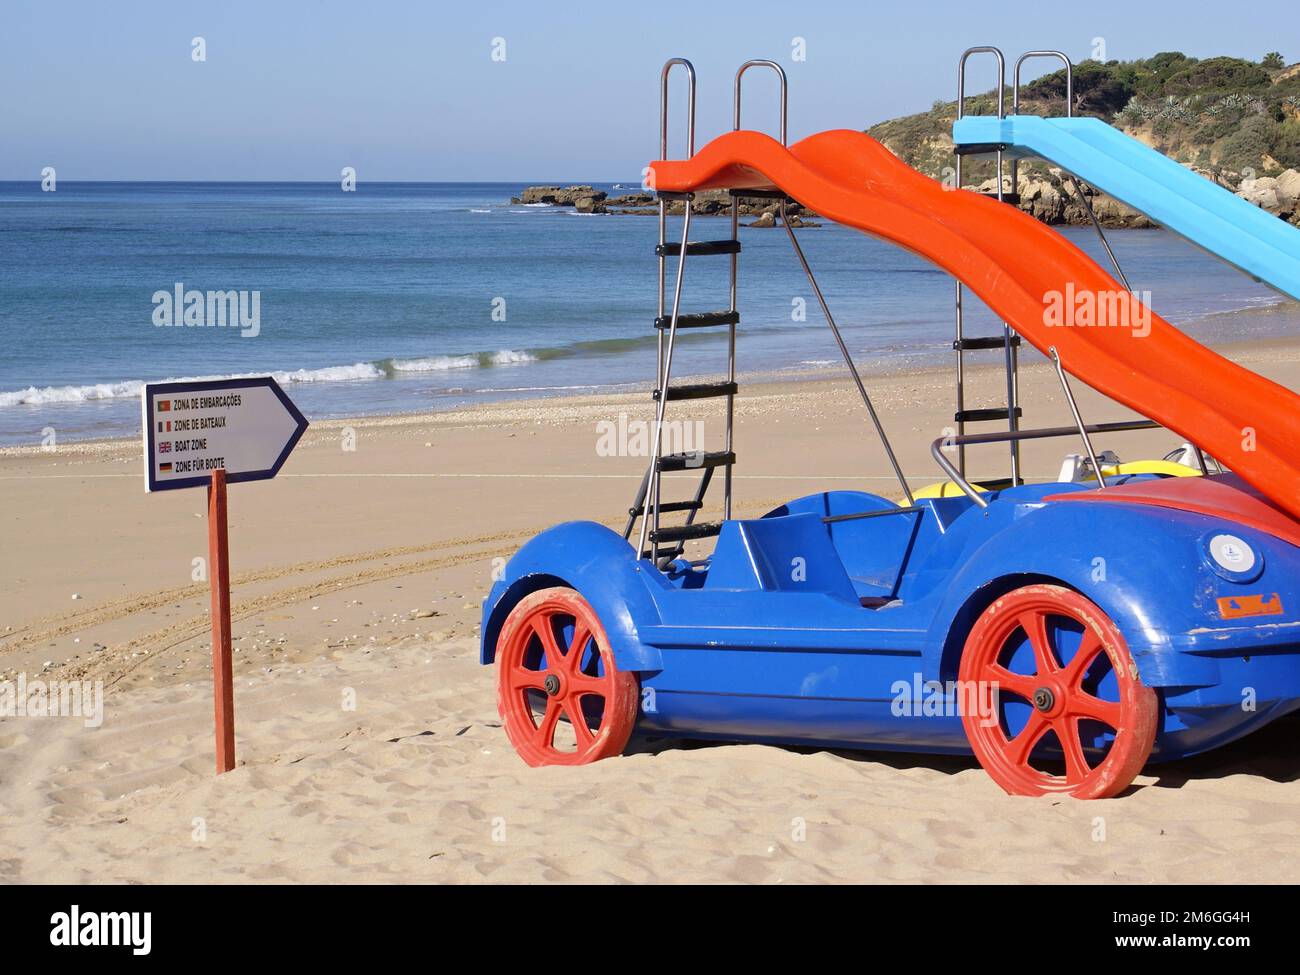 Funny pedal boats in car shape on Albufeira beach, Algarve - Portugal Stock Photo